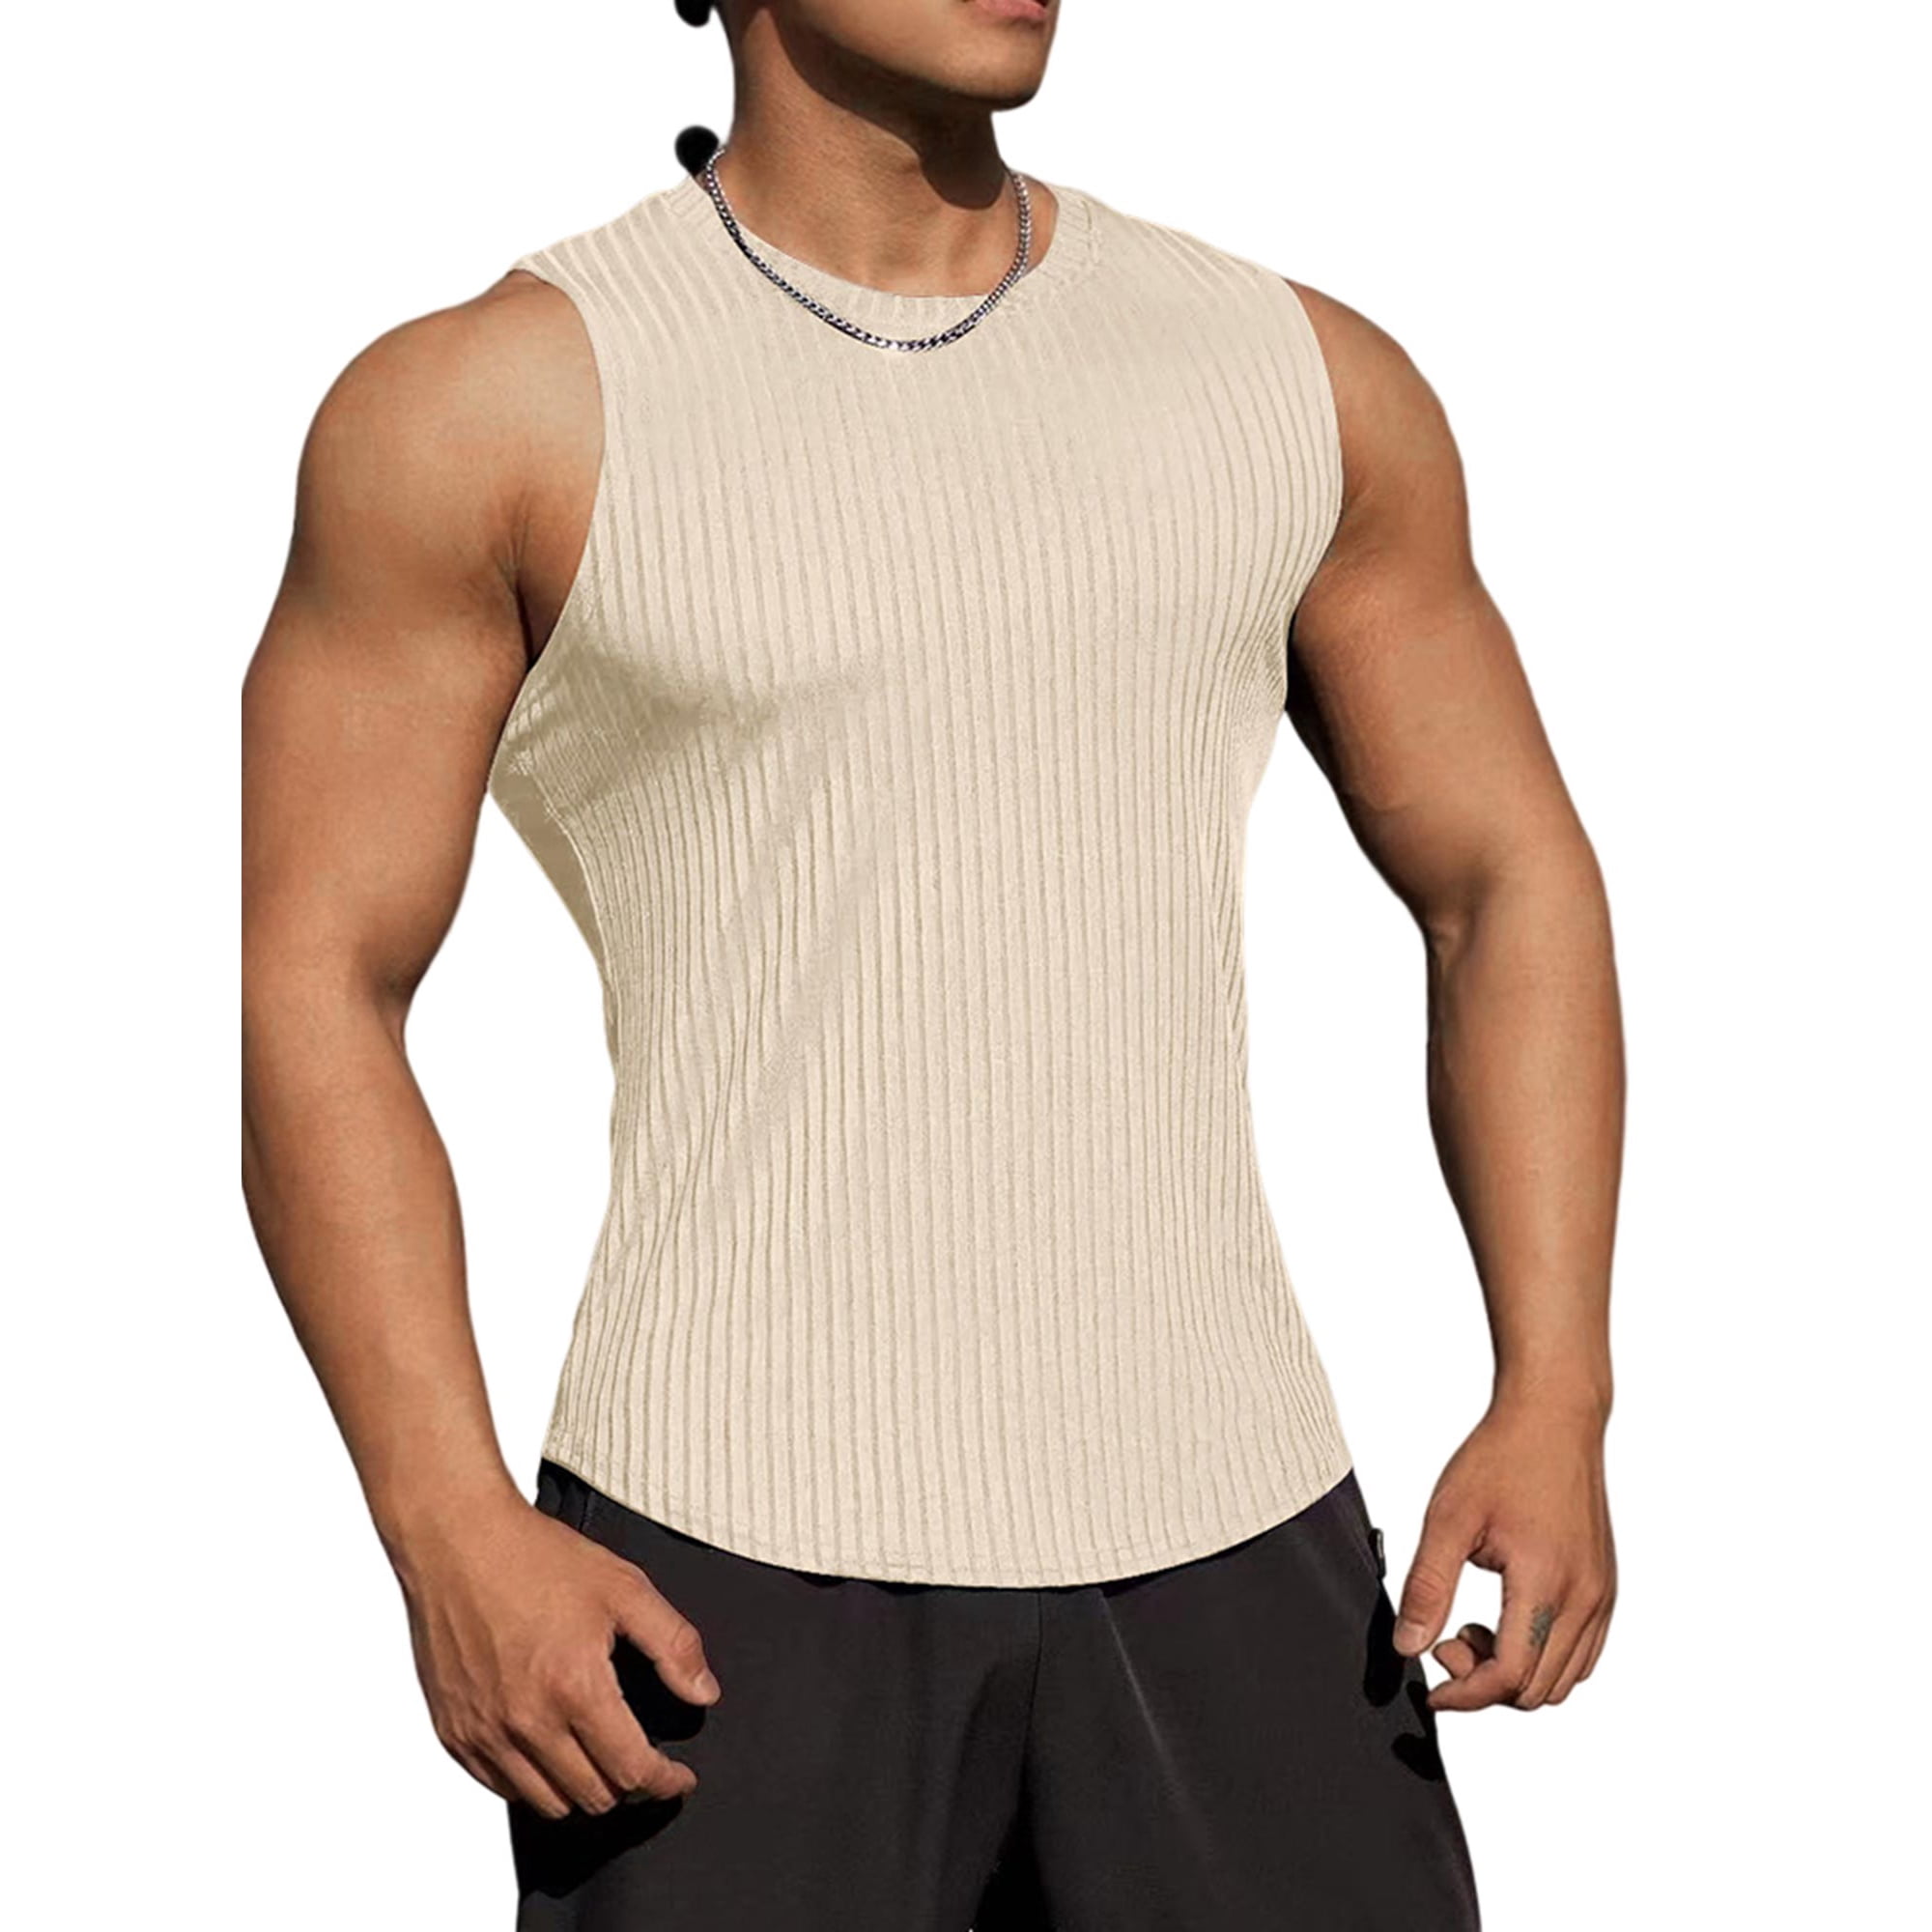 Springttc Men's Casual T-Shirt Sports Fitness Round Neck Sleeveless Activewear Tank Tops, Size: 3XL, Brown